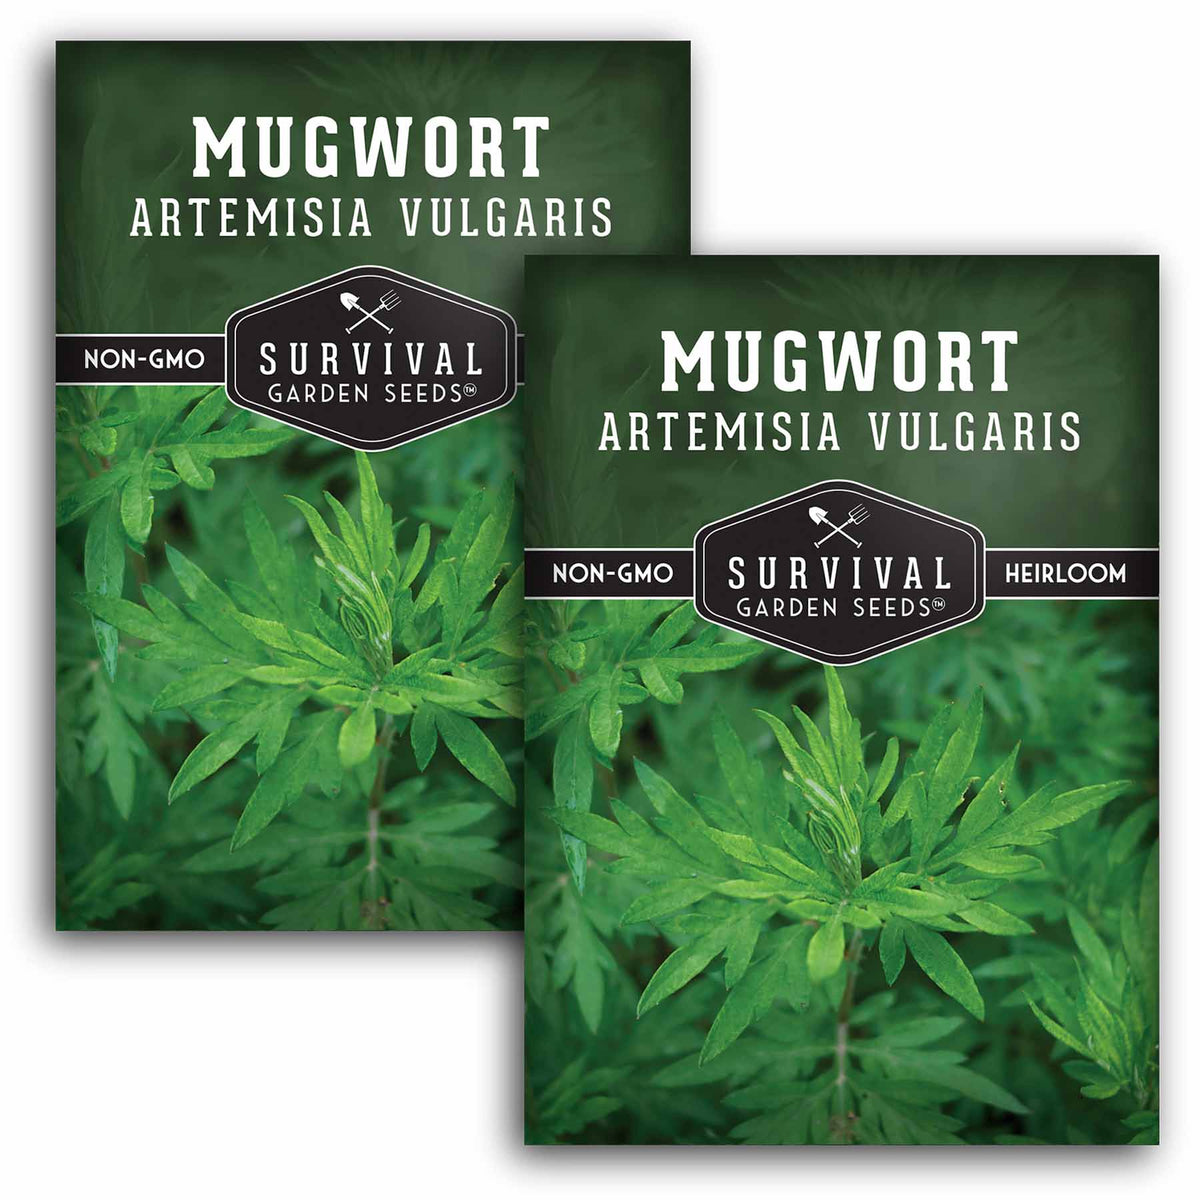 2 packets of Mugwort seeds